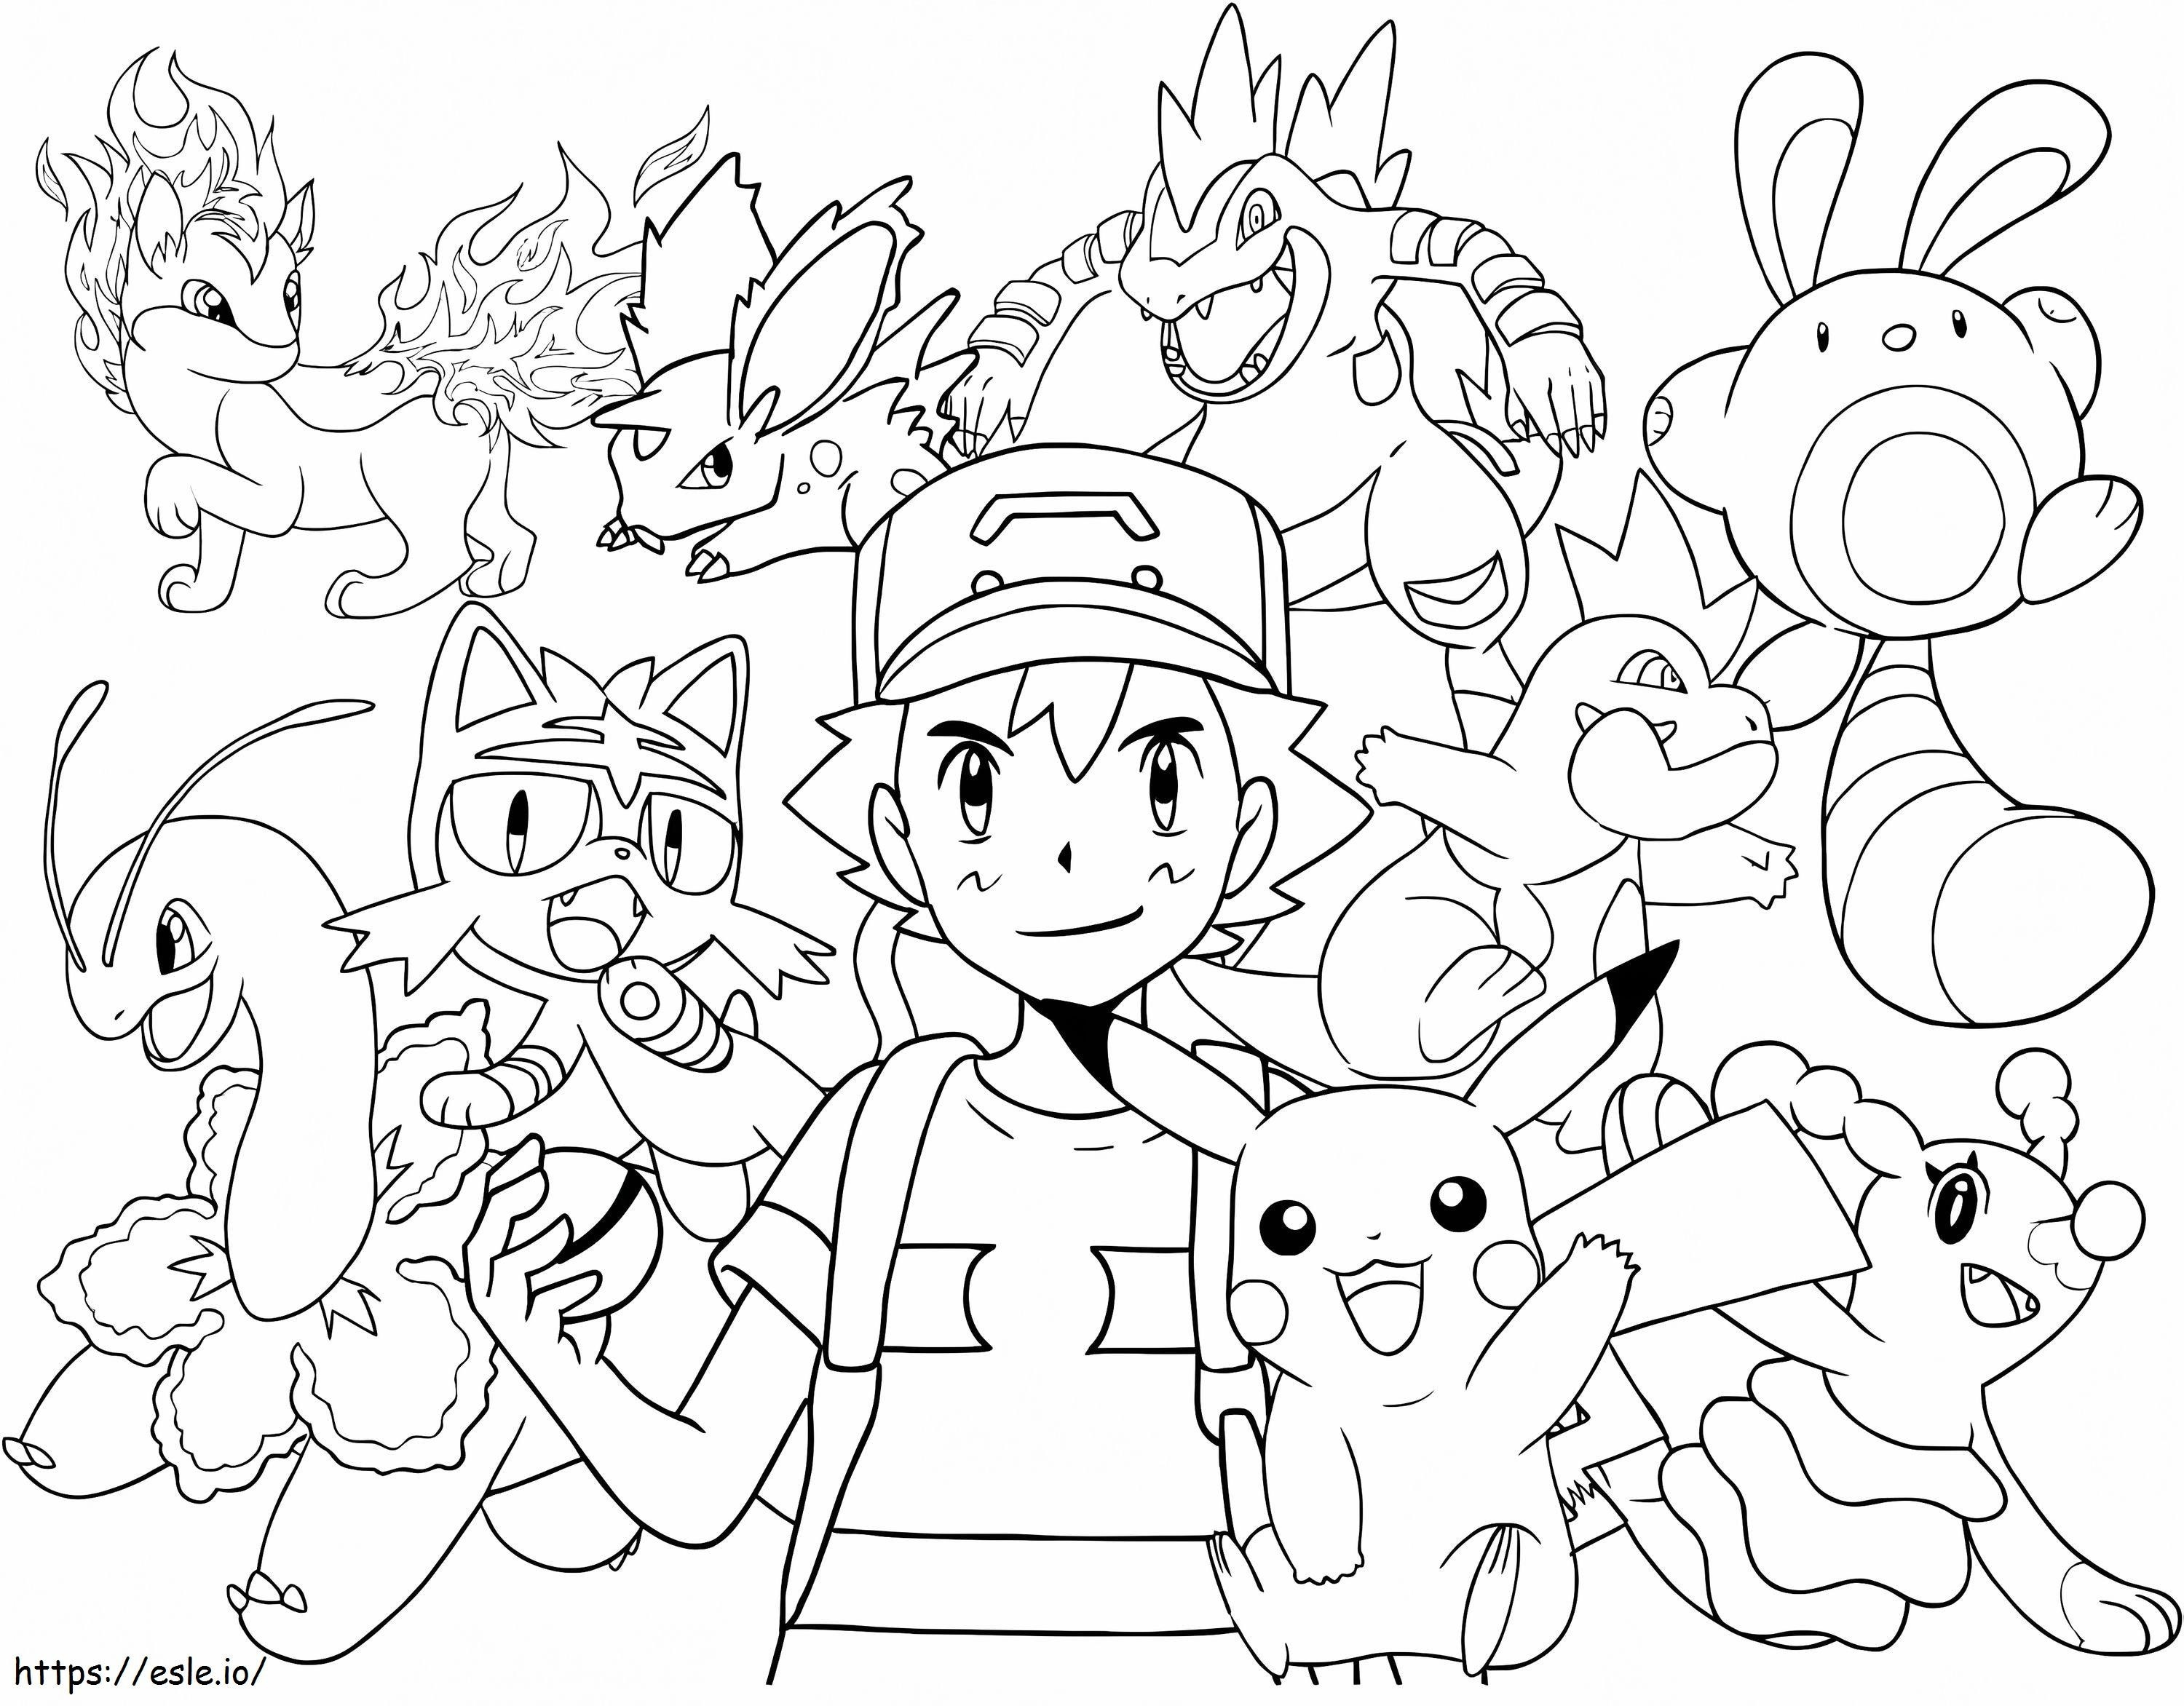 Ash Ketchum And Pokemon coloring page